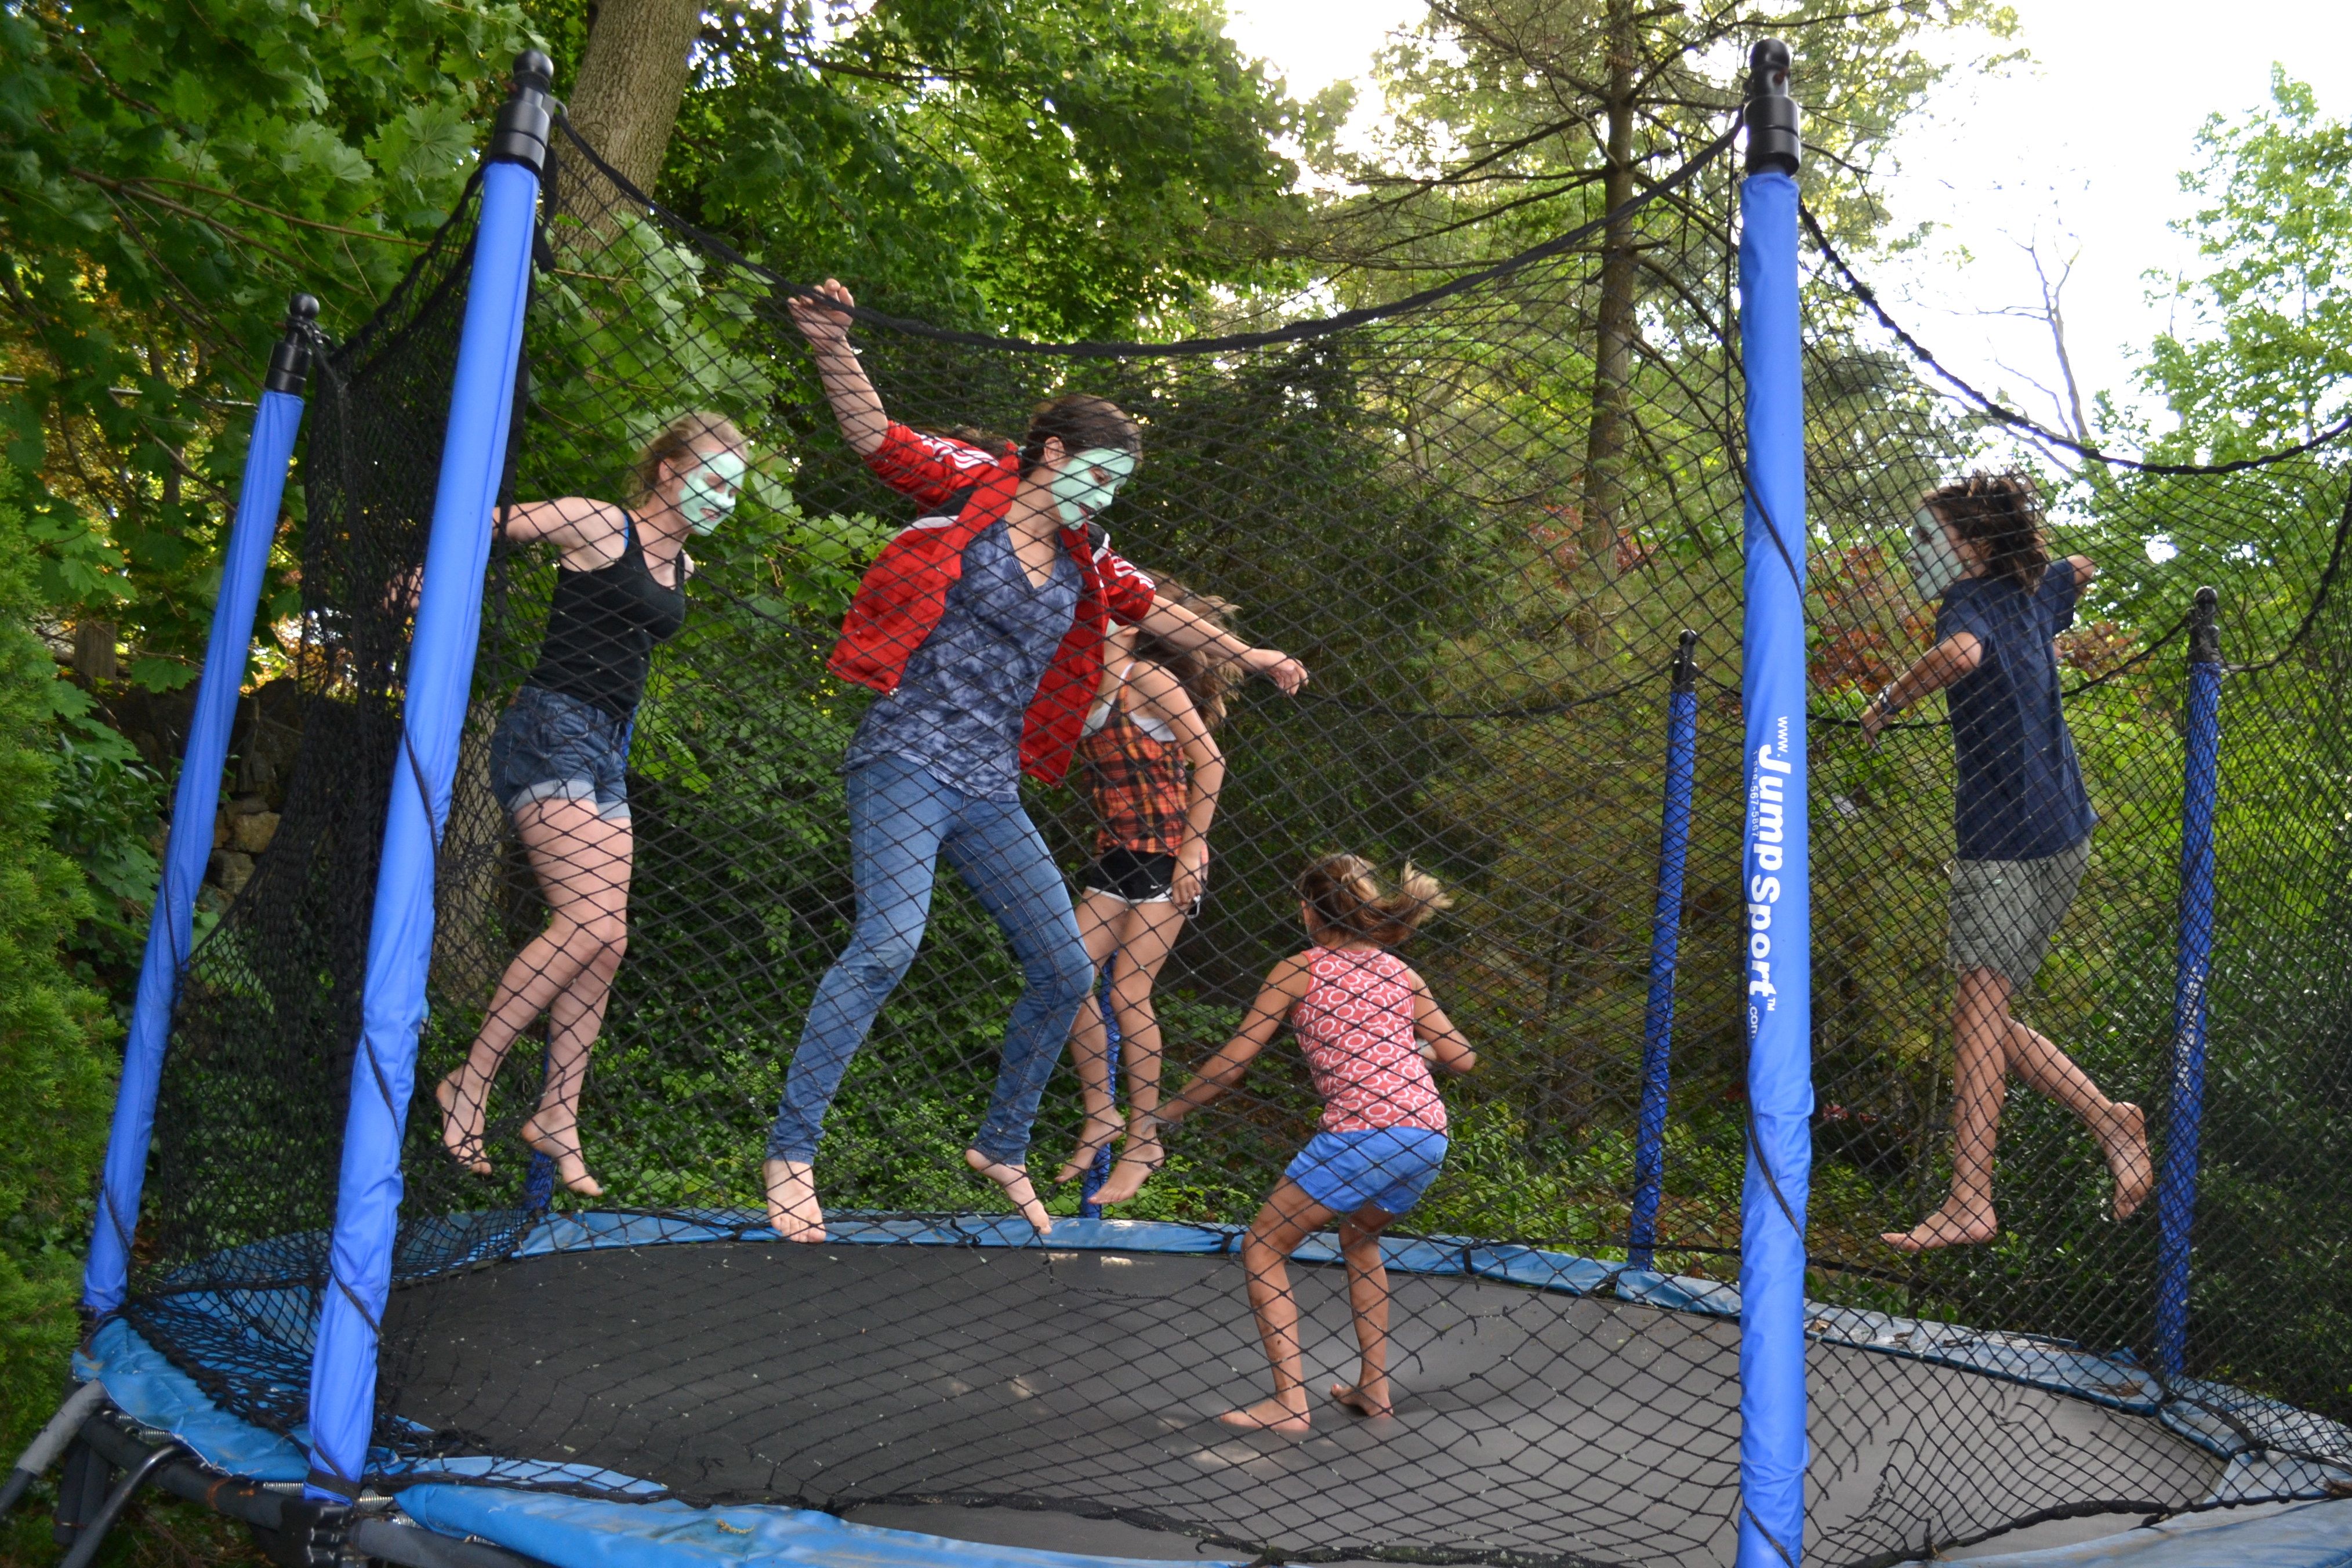 trampoline jumping teenagers trampolines safest adults krystle jaffe nursing